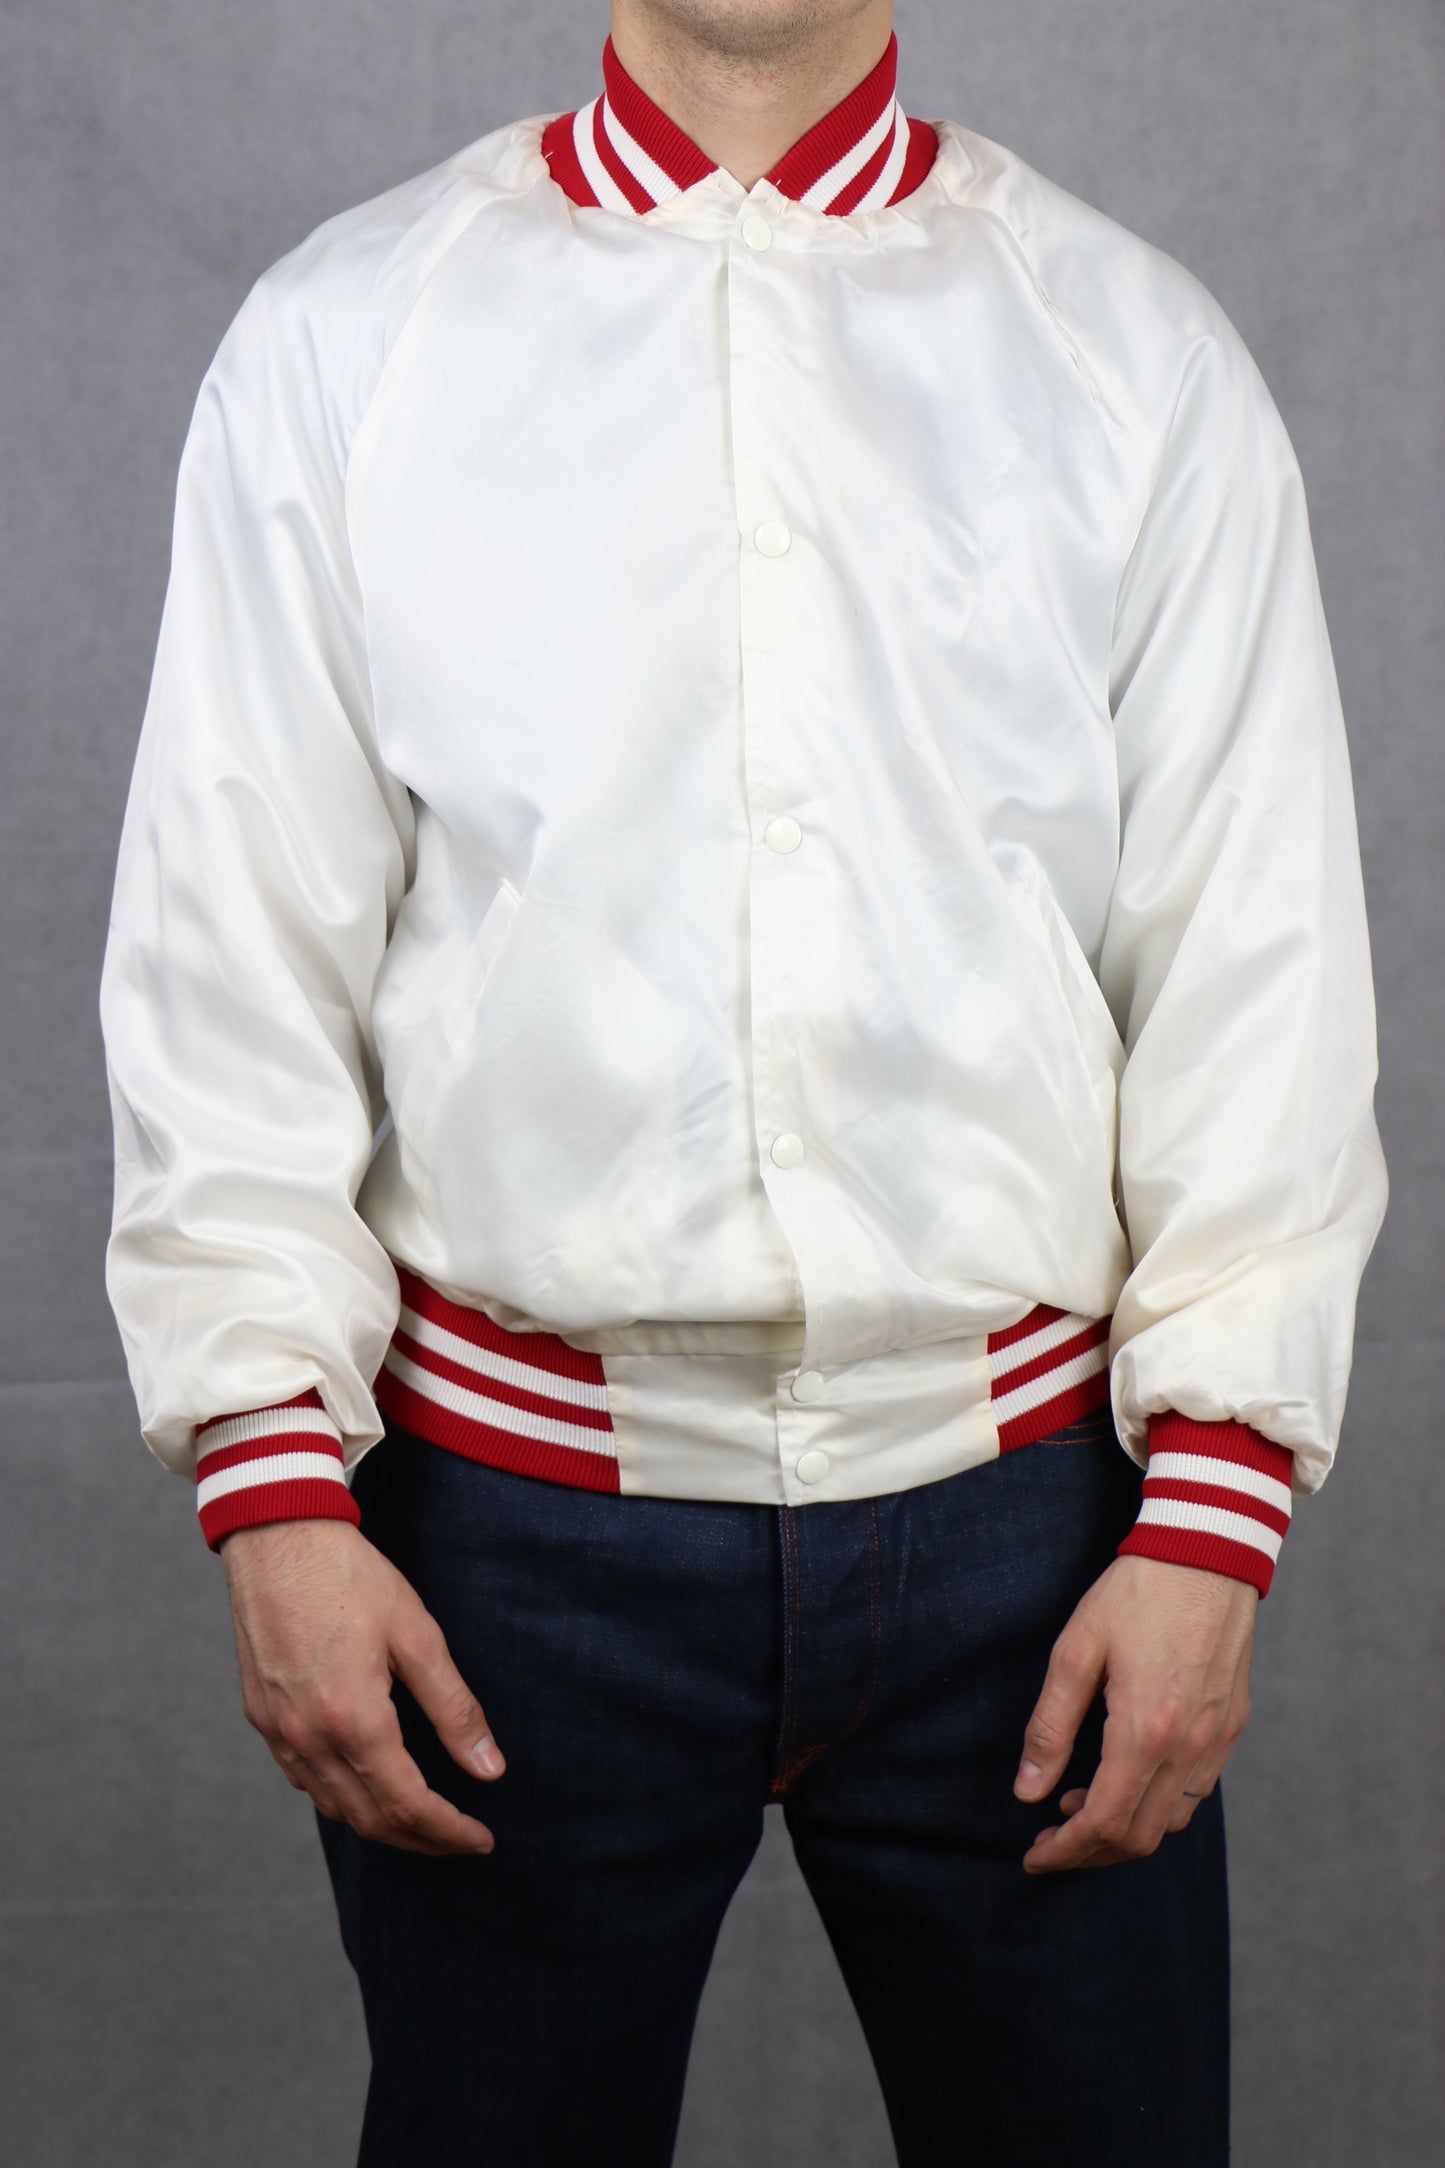 Satin White Bomber Jacket (Joplin, Missouri) - vintage clothing clochard92.com